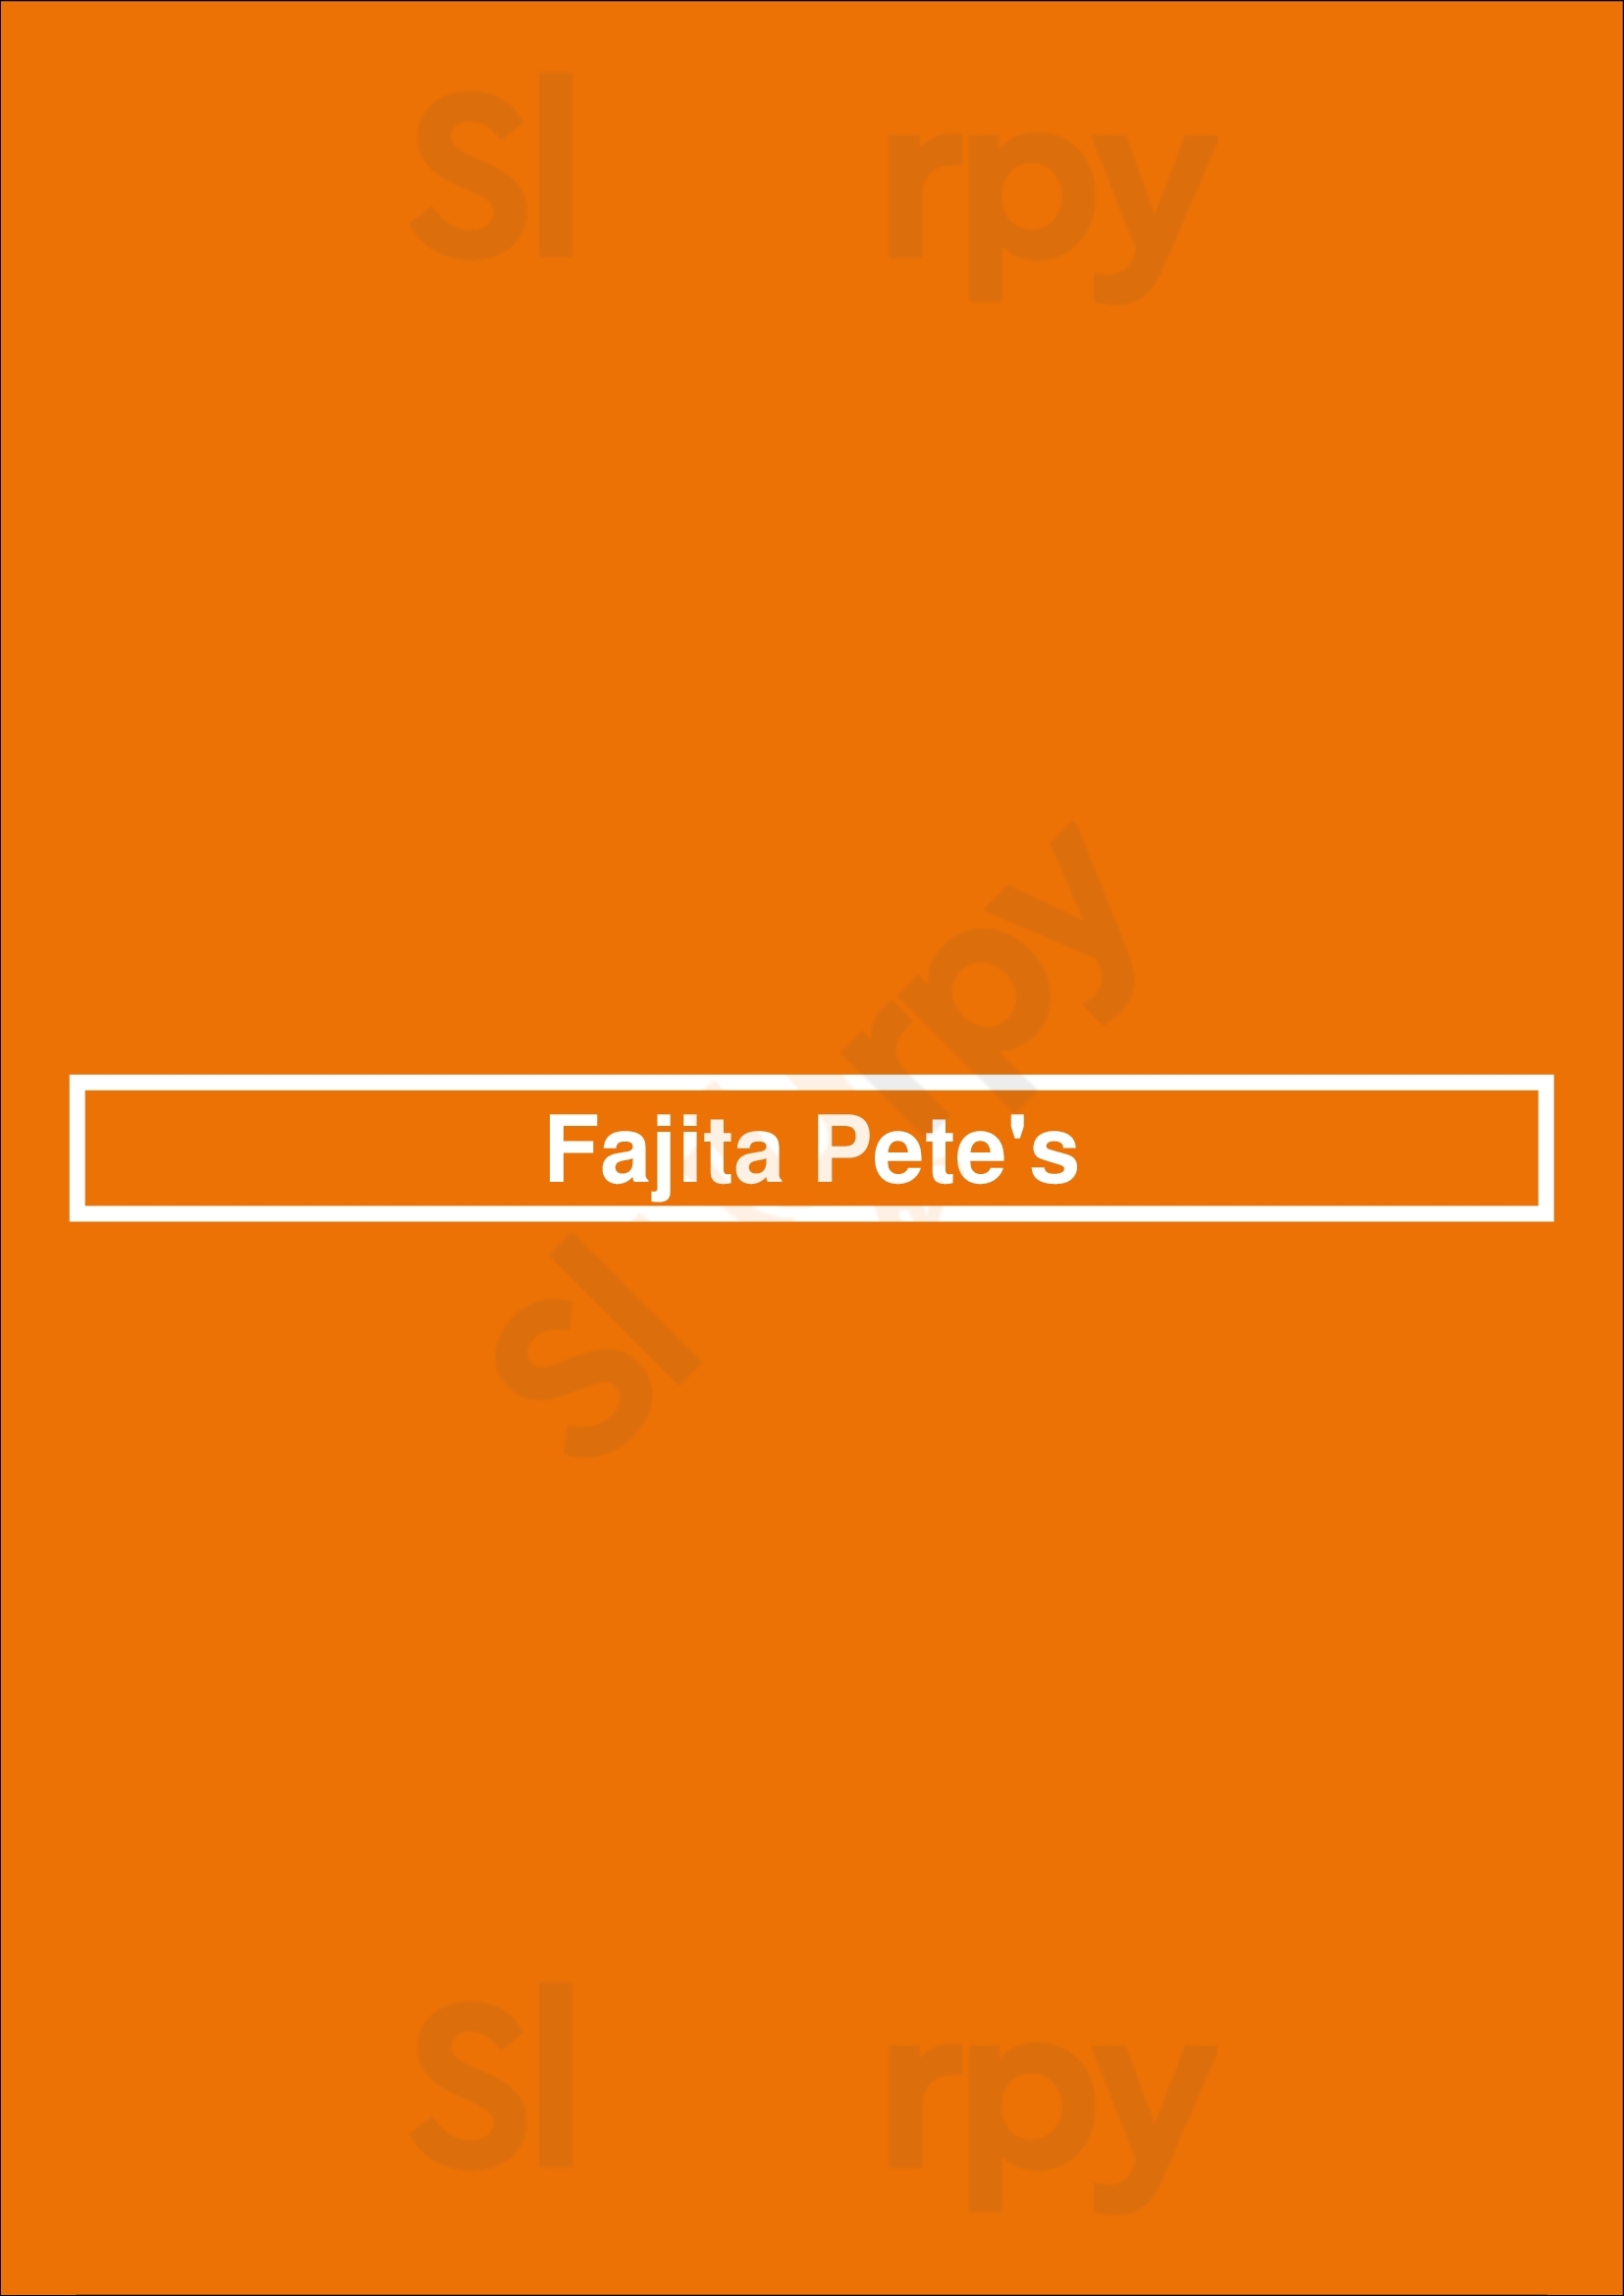 Fajita Pete's - Copperfield Houston Menu - 1